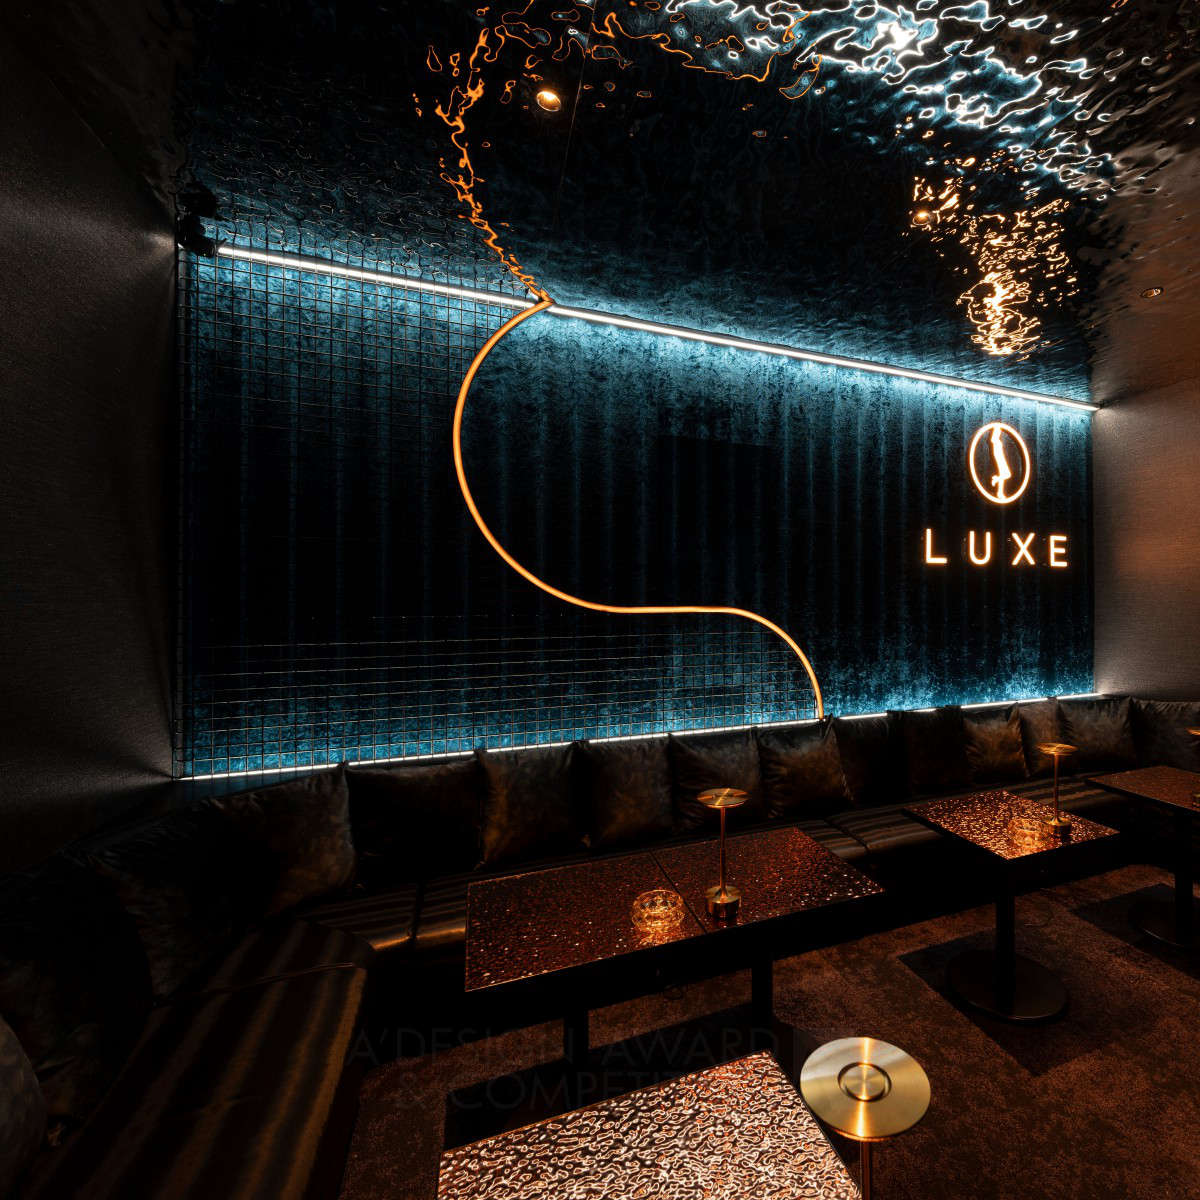 Luxe Lounge by Takahiro Todoroki